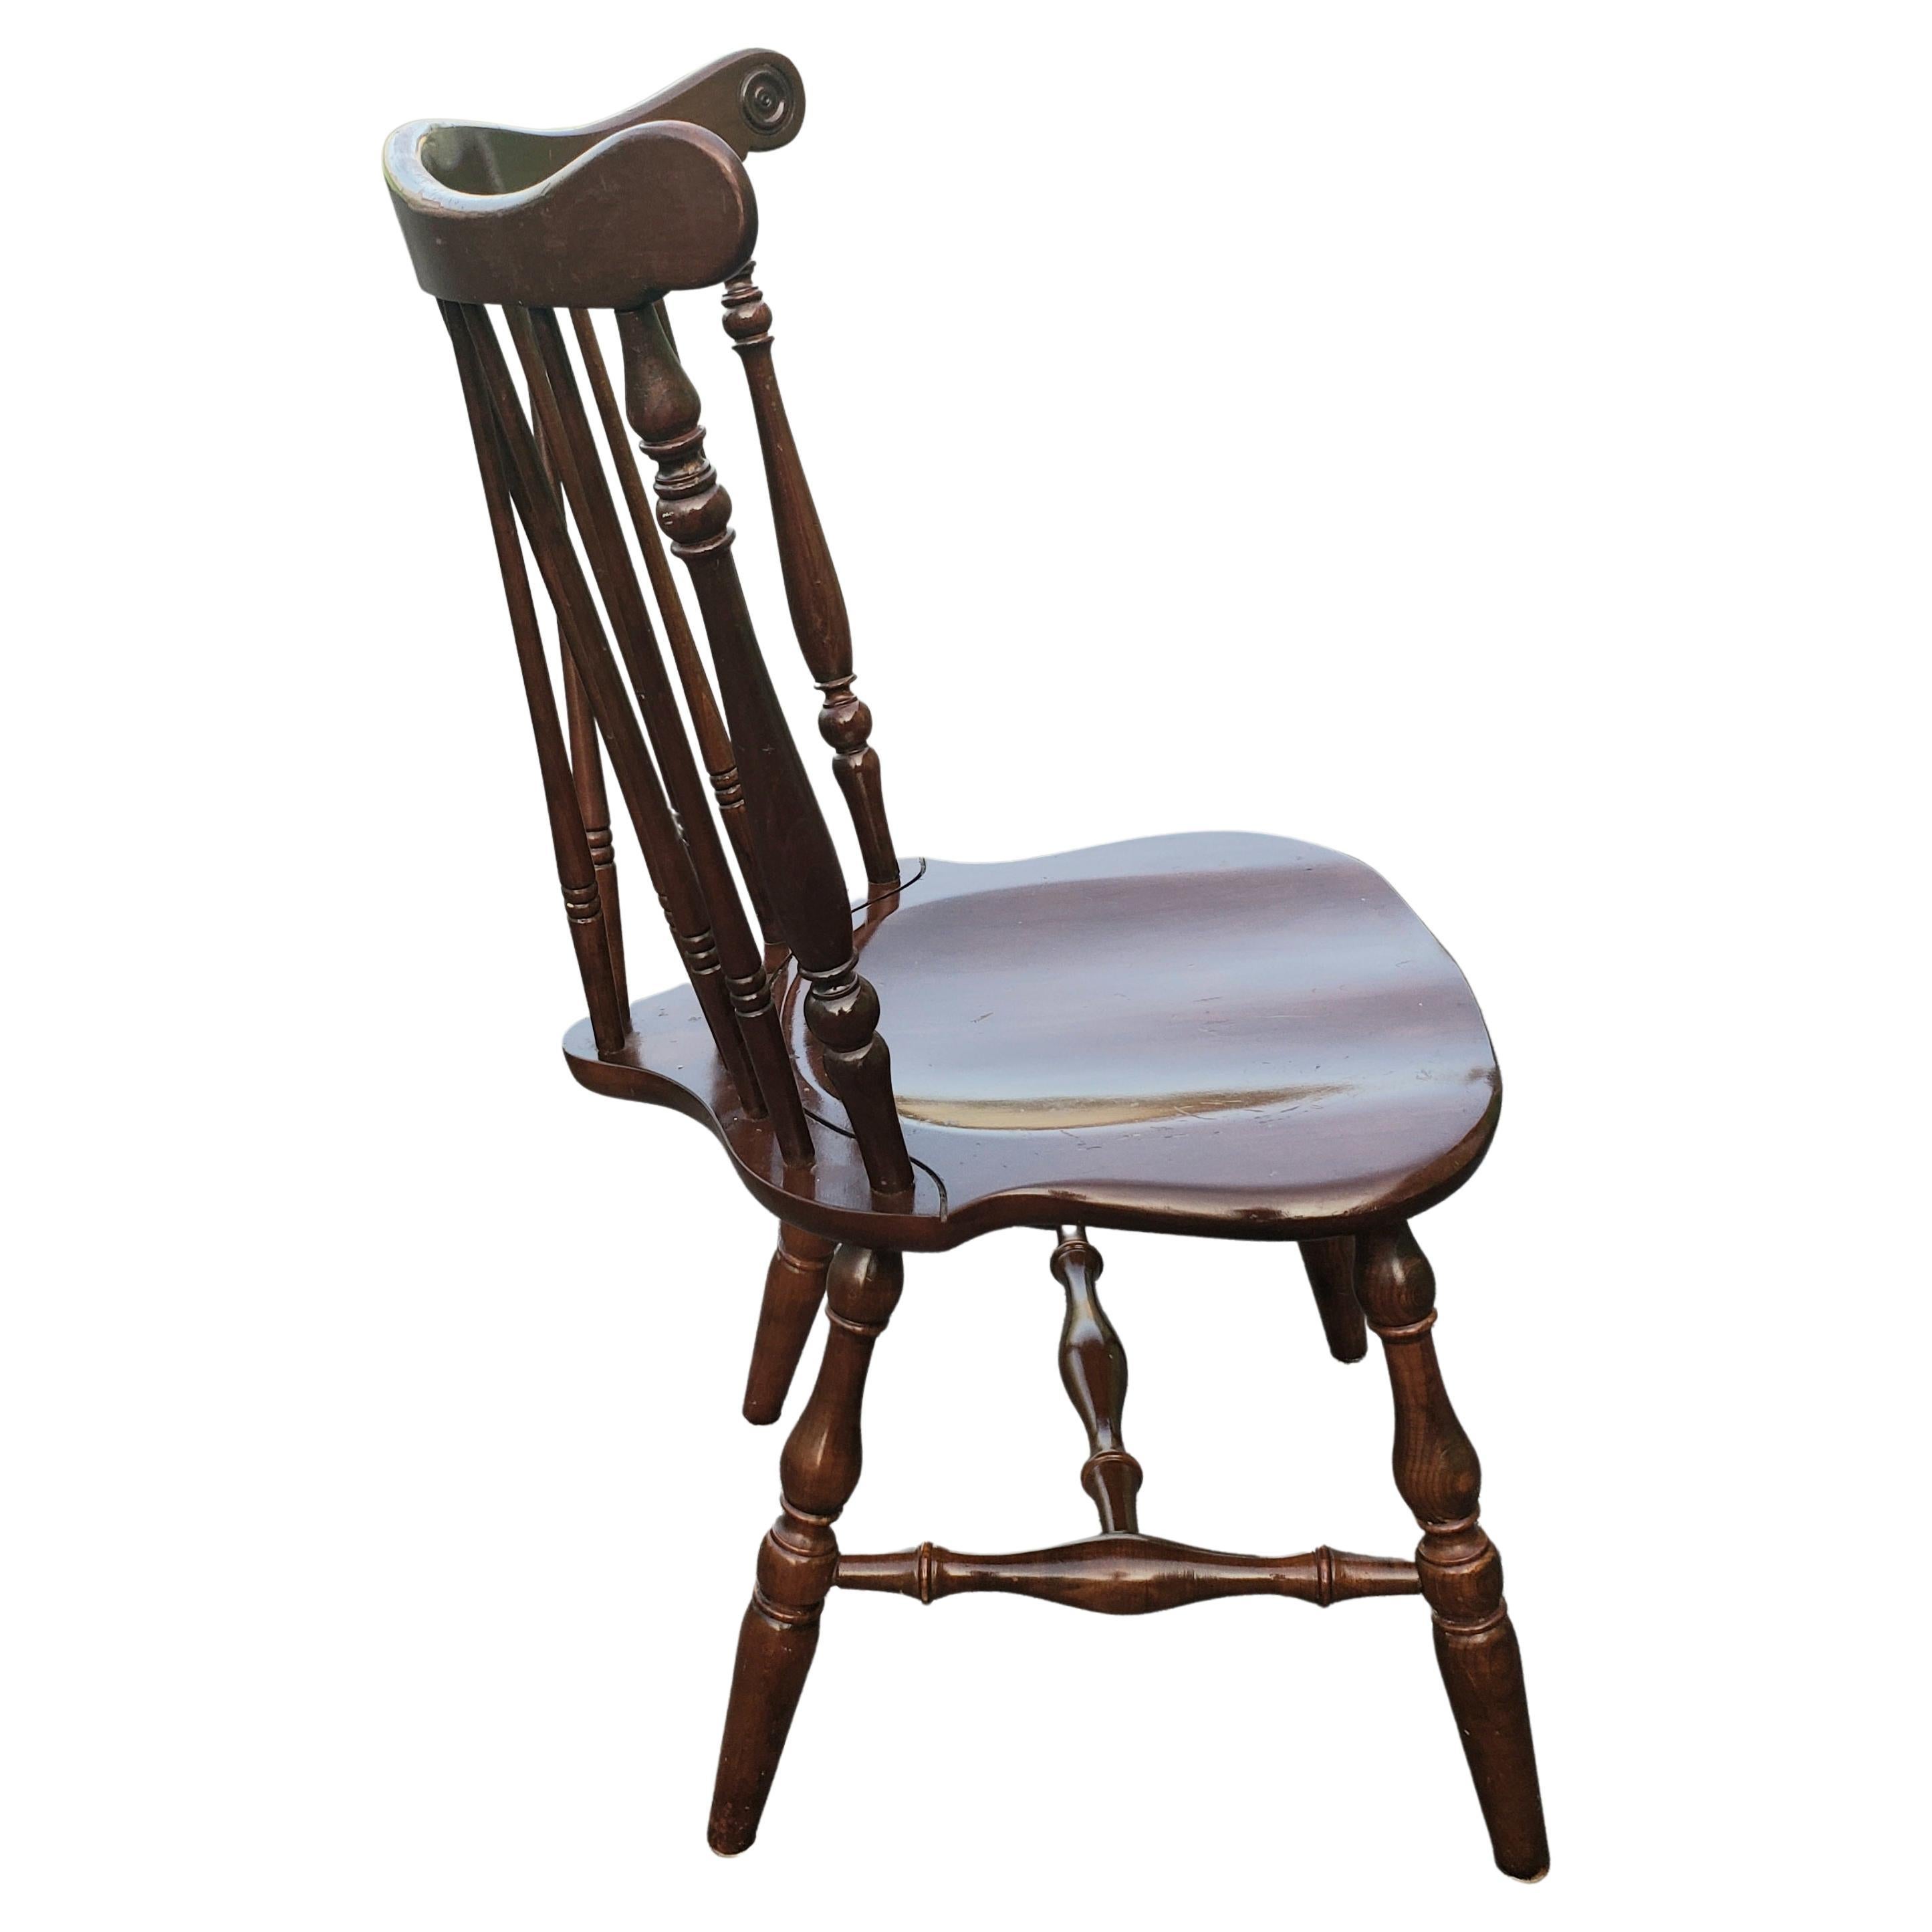 Woodwork Kling Furniture Cherry Mahogany Fiddleback Brace Back Windsor Chairs, C. 1940s